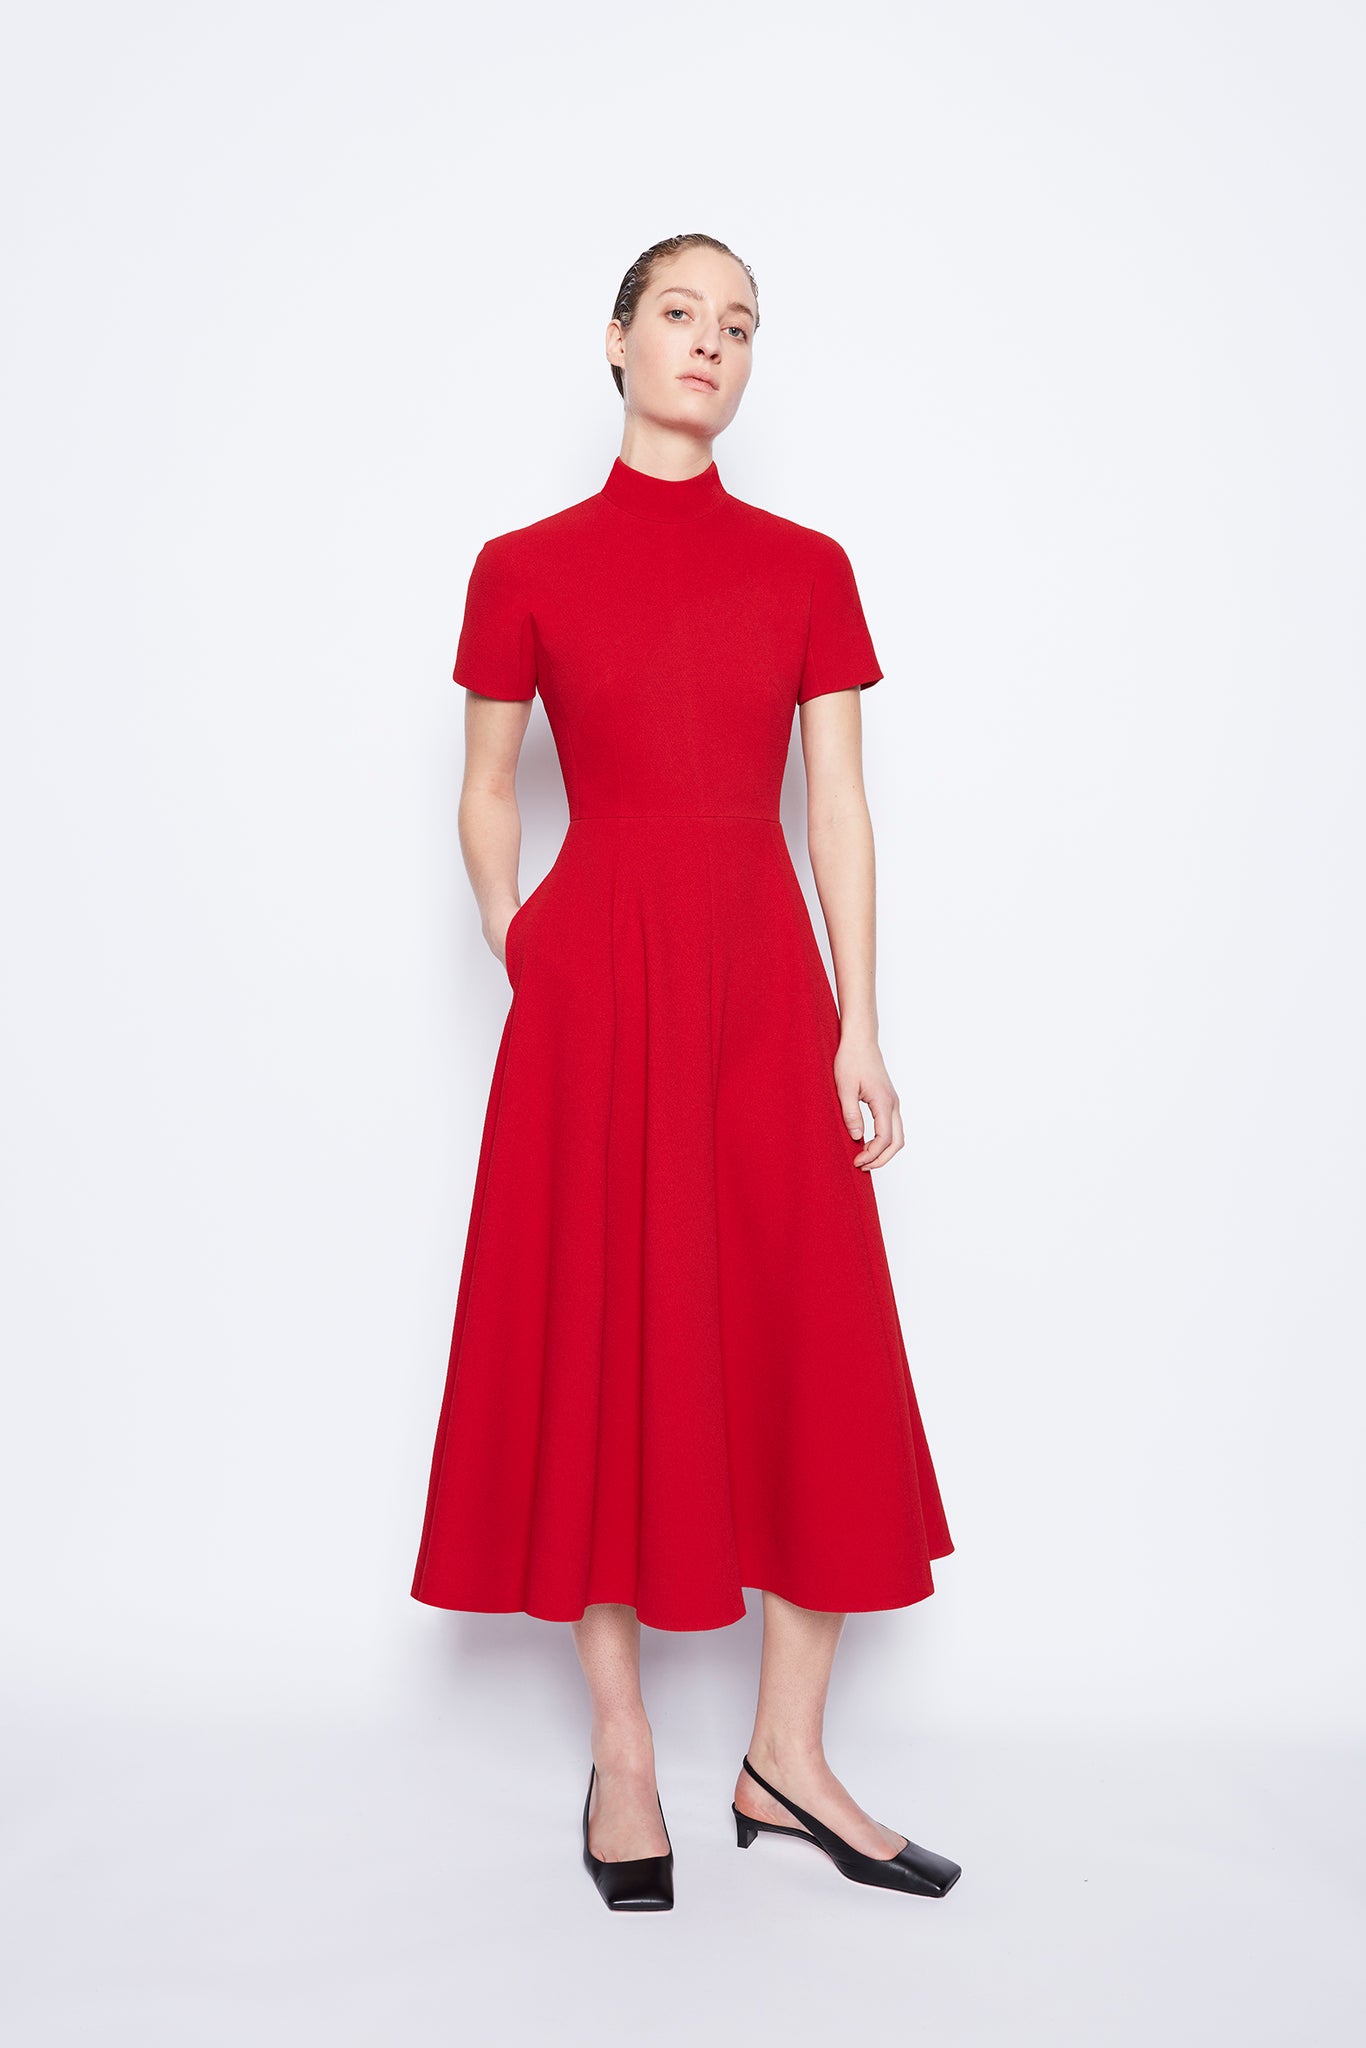 Camilla Dress | Red Crepe High Neck Short Sleeve Dress | Emilia Wickstead